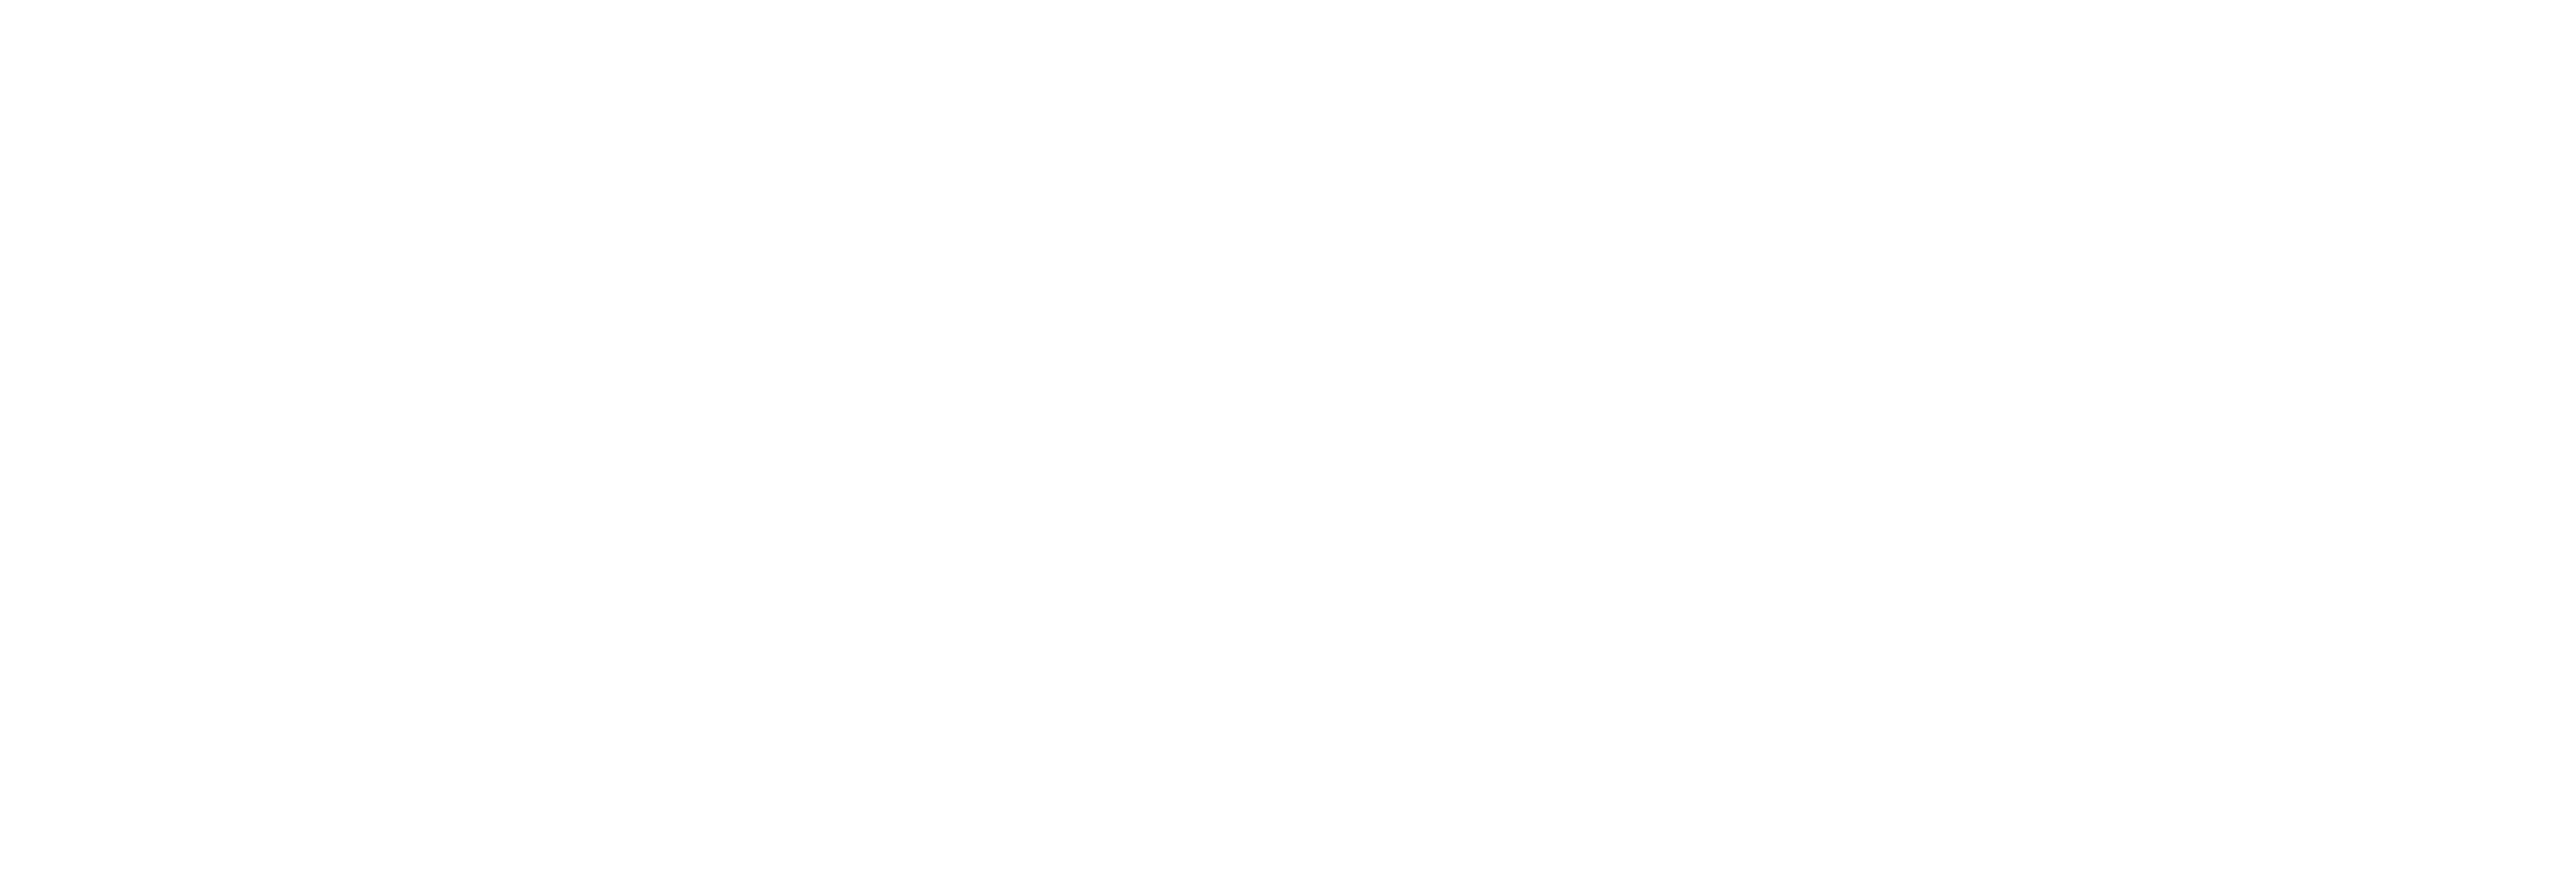 AniCura Mönchengladbach-Venn logo